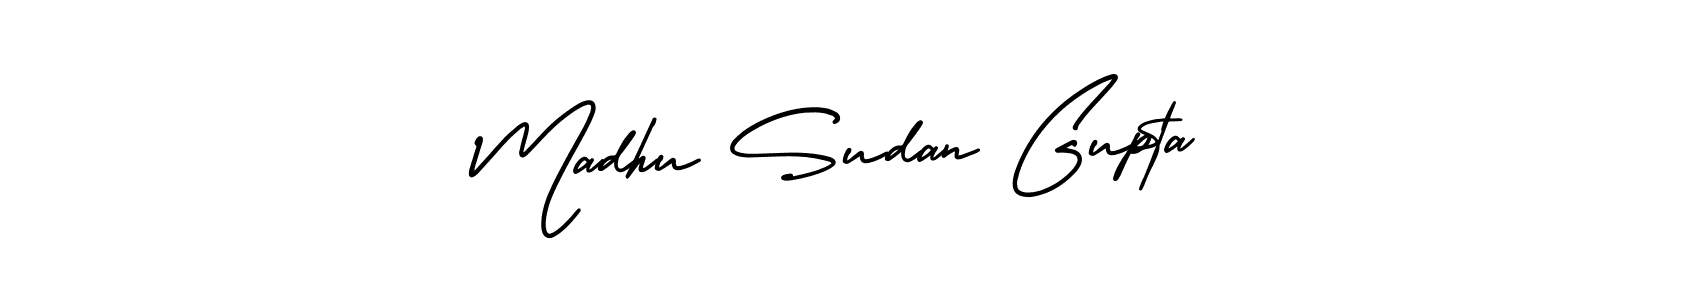 Make a beautiful signature design for name Madhu Sudan Gupta. Use this online signature maker to create a handwritten signature for free. Madhu Sudan Gupta signature style 3 images and pictures png